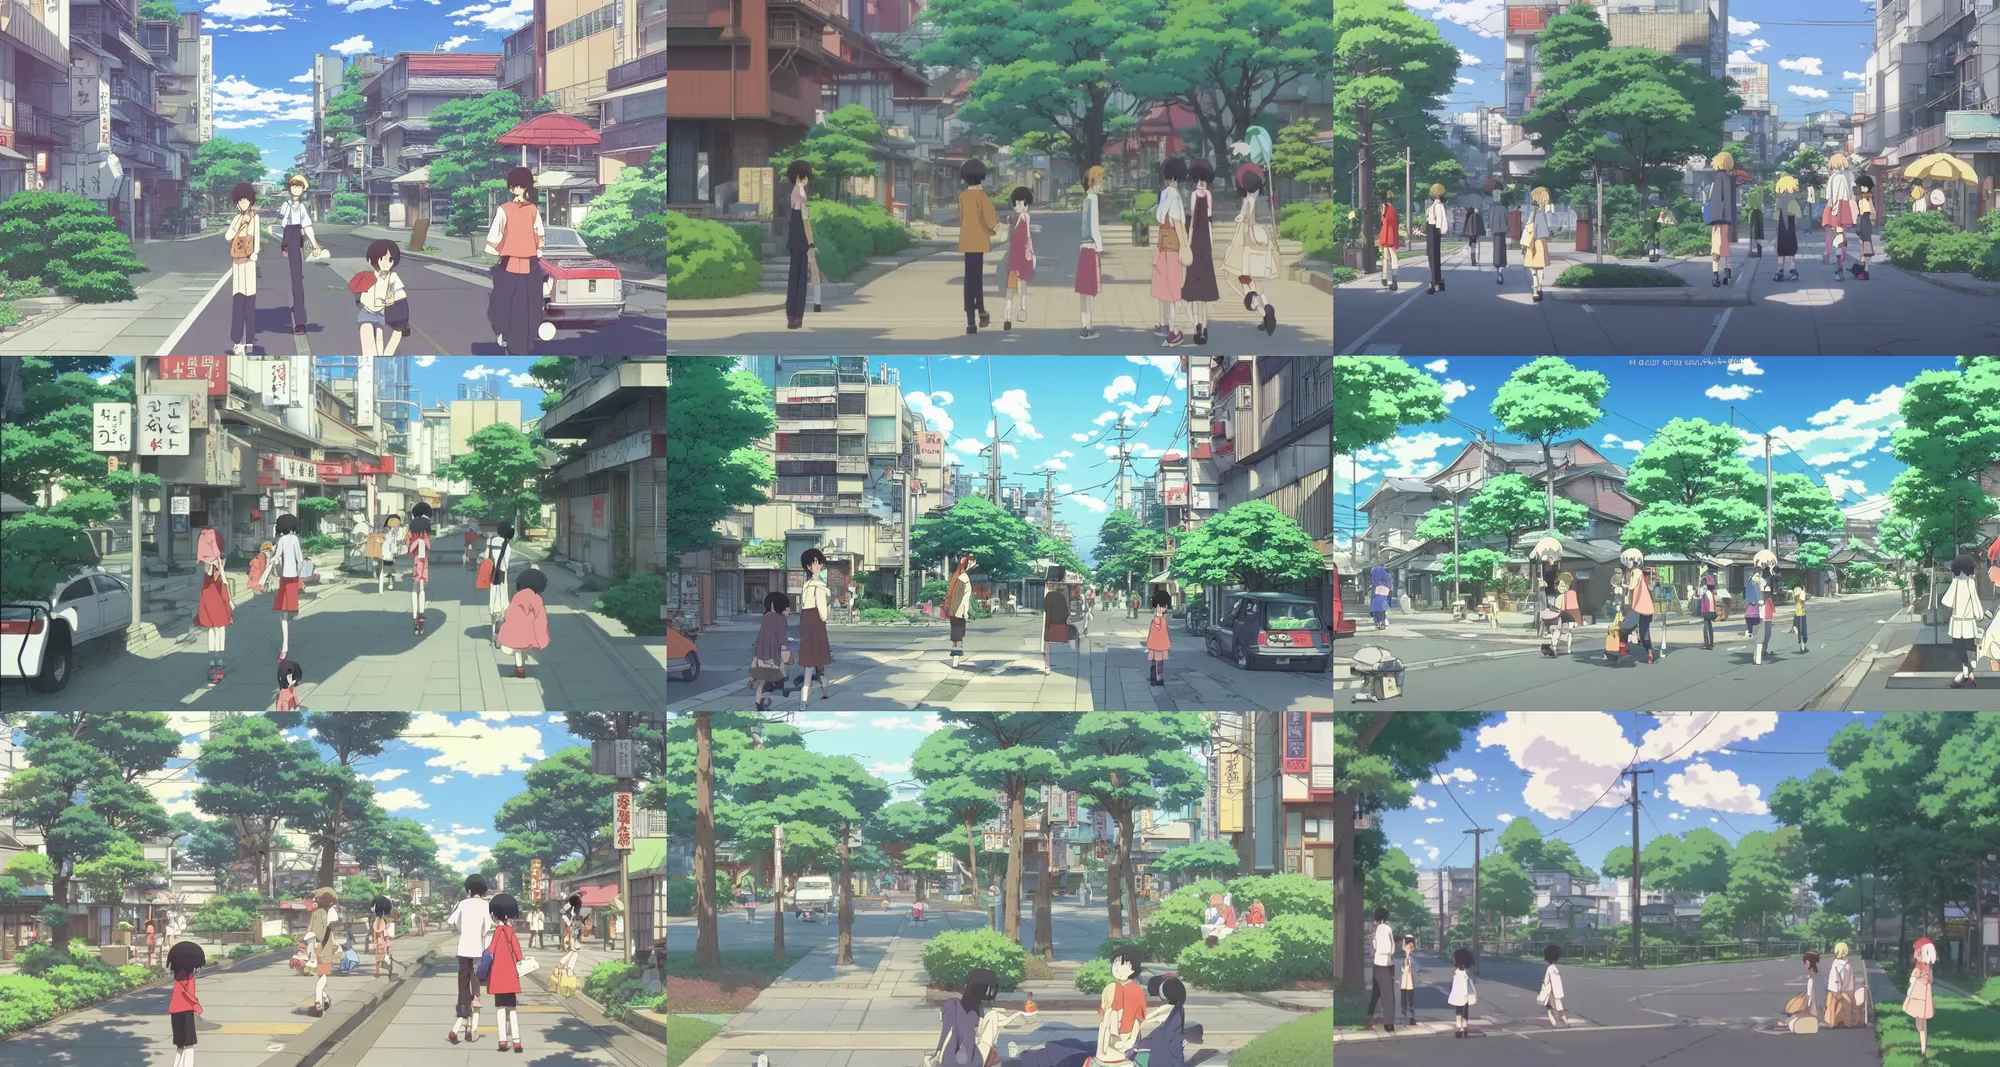 Prompt: beautiful slice of life anime scene of suburban tokyo street, relaxing, calm, cozy, peaceful, by mamoru hosoda, hayao miyazaki, makoto shinkai